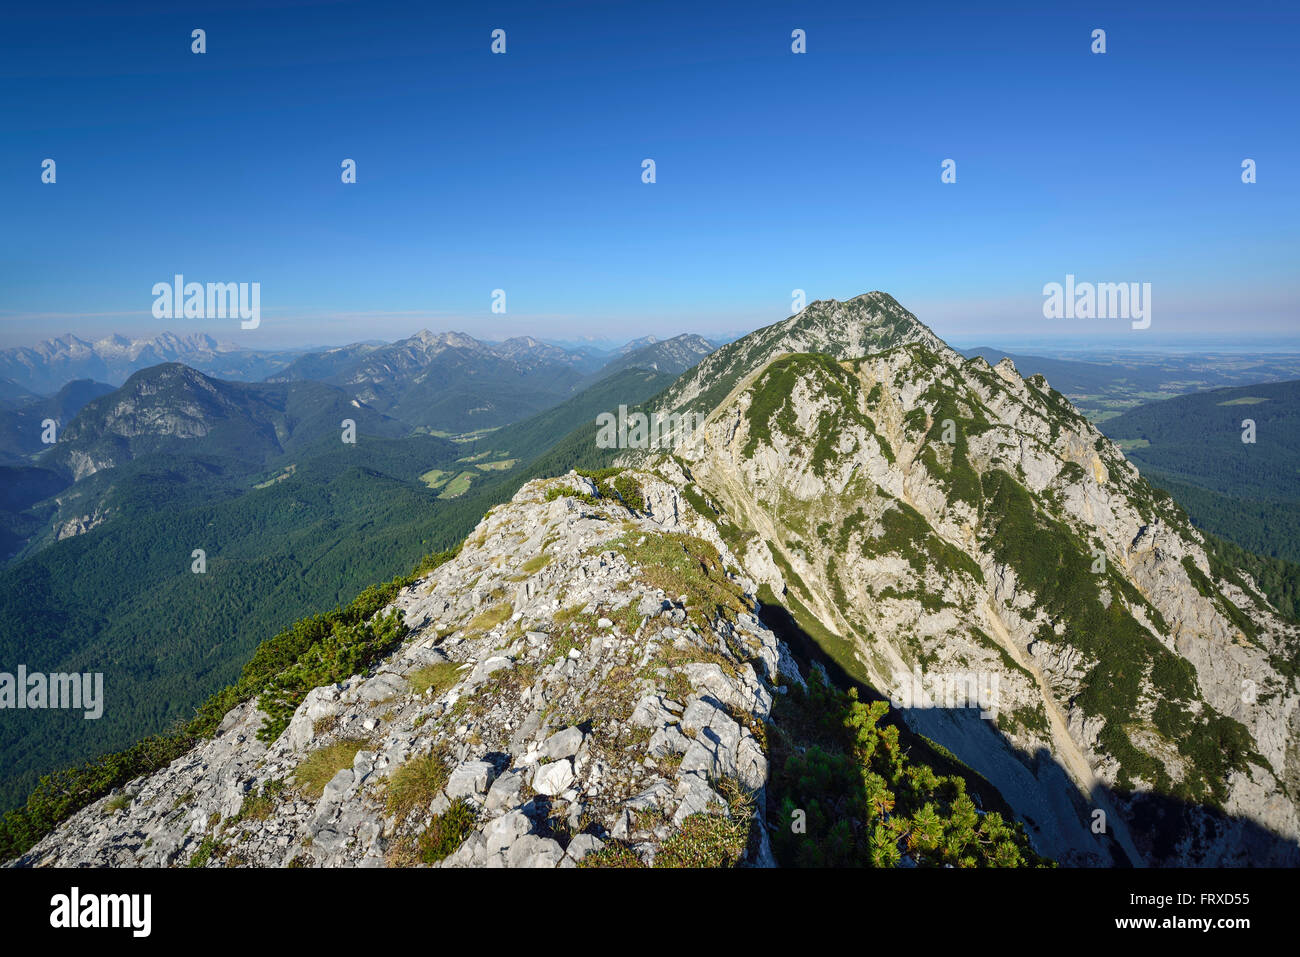 View from mount Hochstaufen, Chiemgau Alps, Chiemgau, Upper Bavaria, Bavaria, Germany Stock Photo